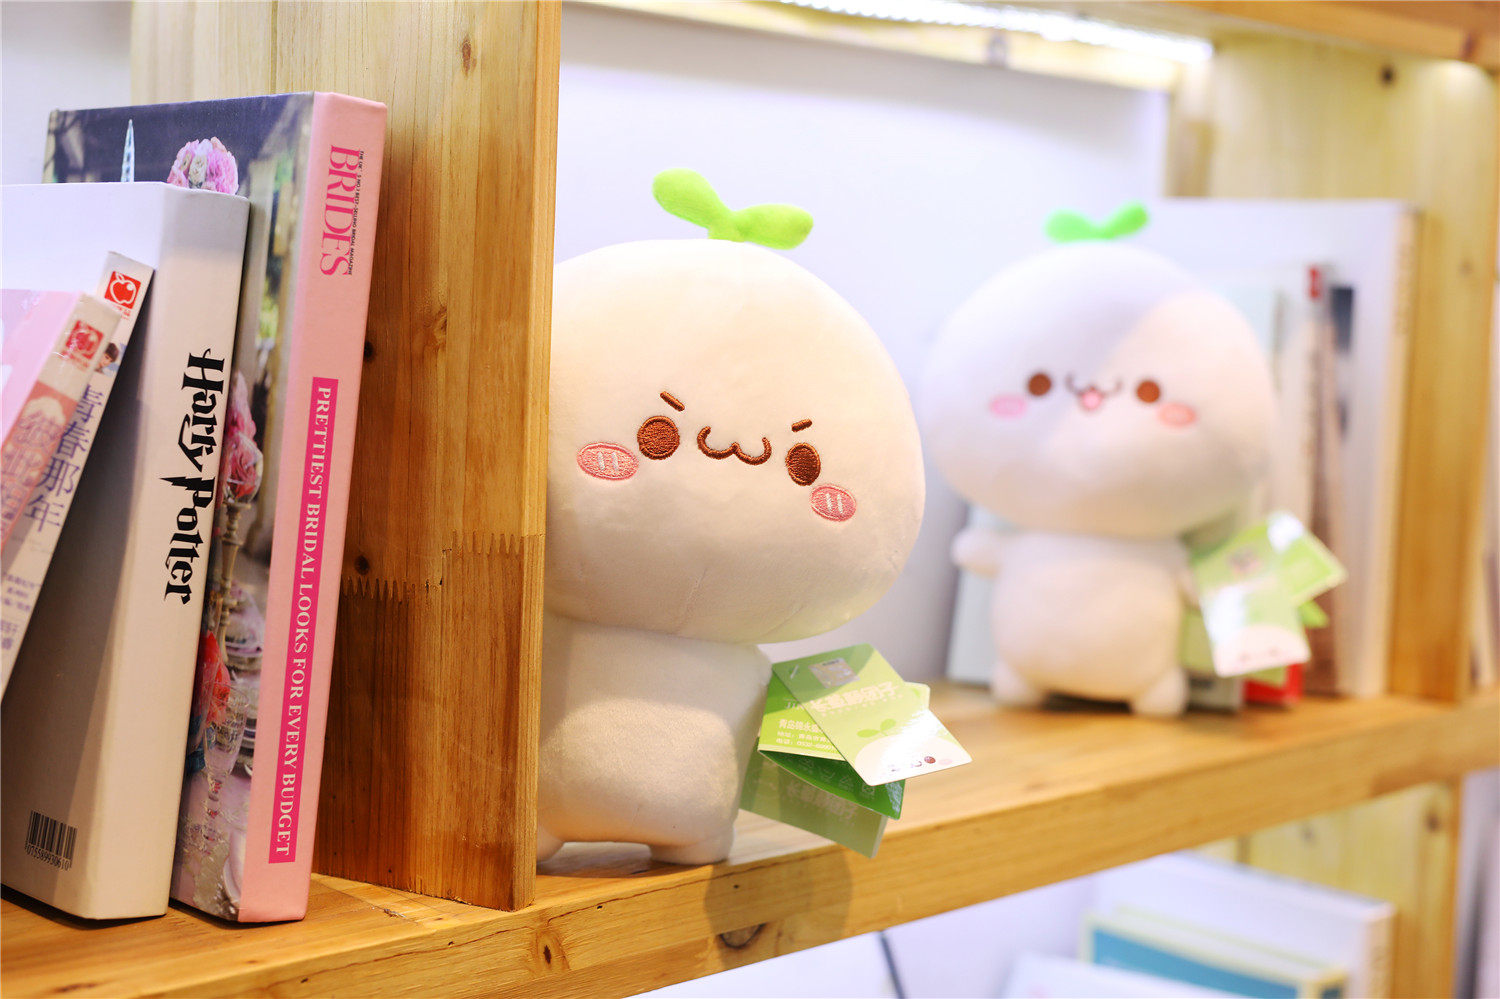  IUTOYYE Anime Onion Plush Doll Stuffed Plush Toy Cute Soft Toy  Home Sofa Pillow Decor Collectible Vocal Plush Toy : Toys & Games